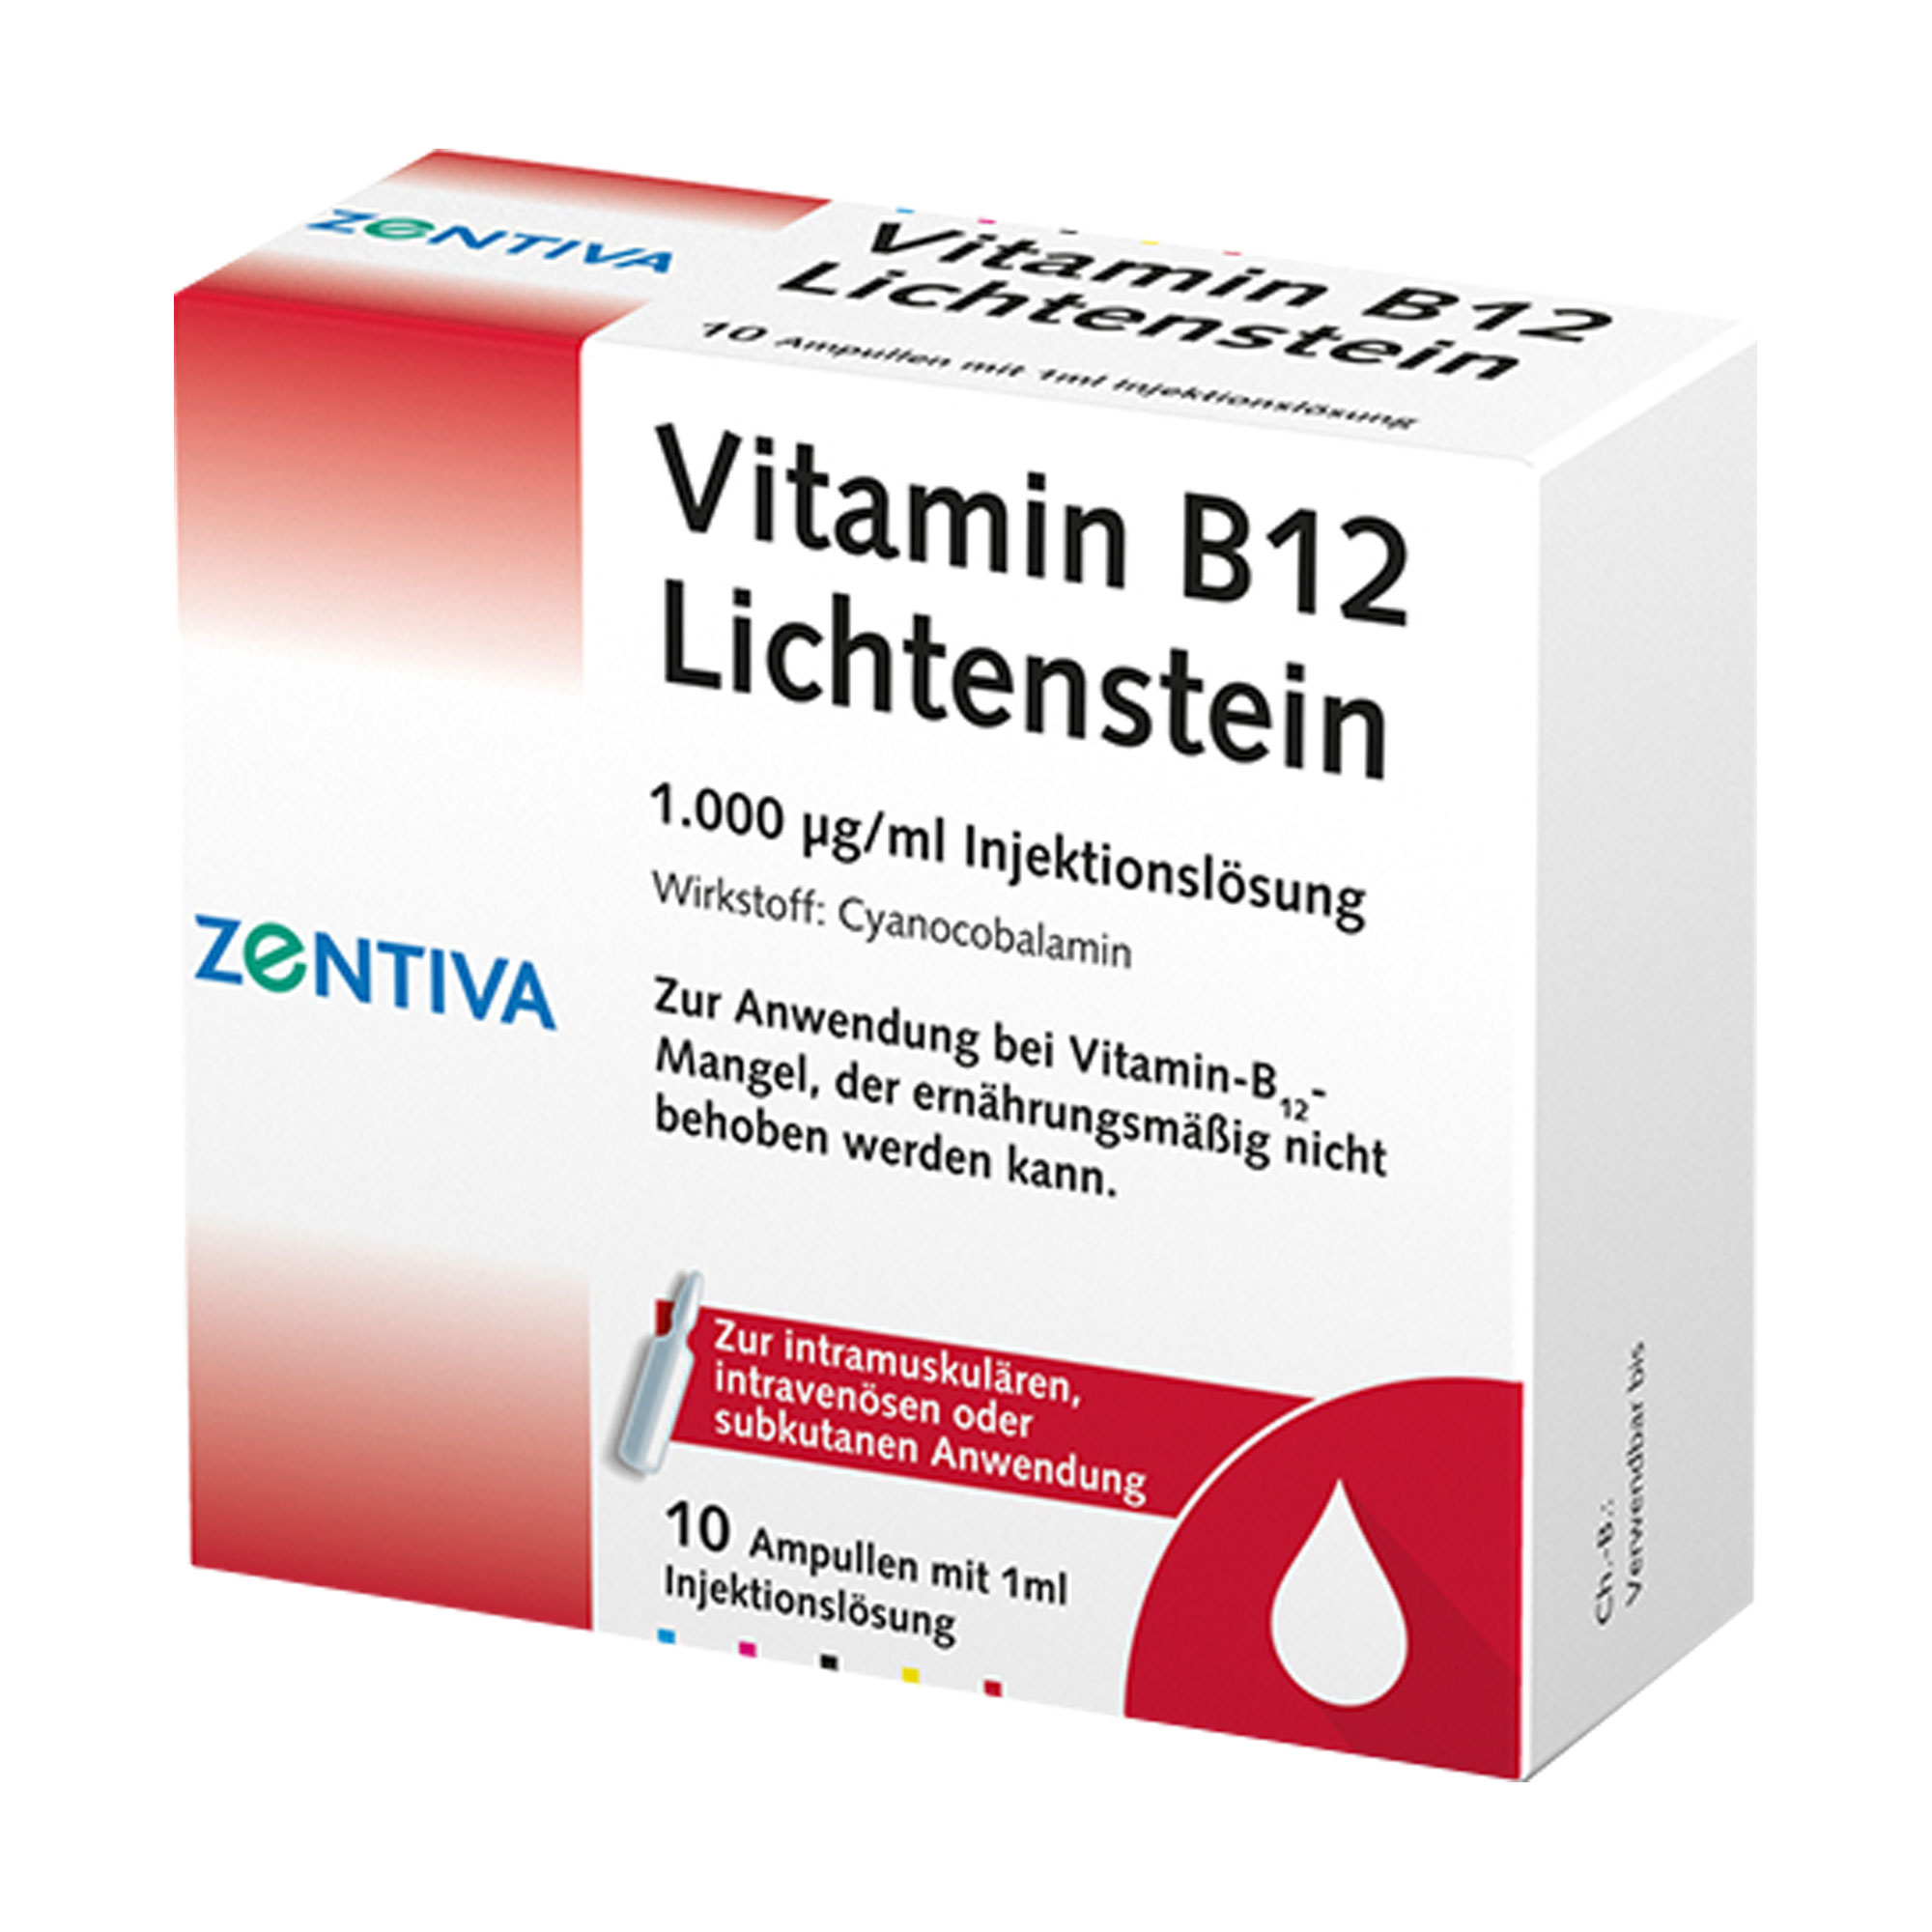 Bei Vitamin-B12-Mangel, der ernährungsmäßig nicht behoben werden kann.